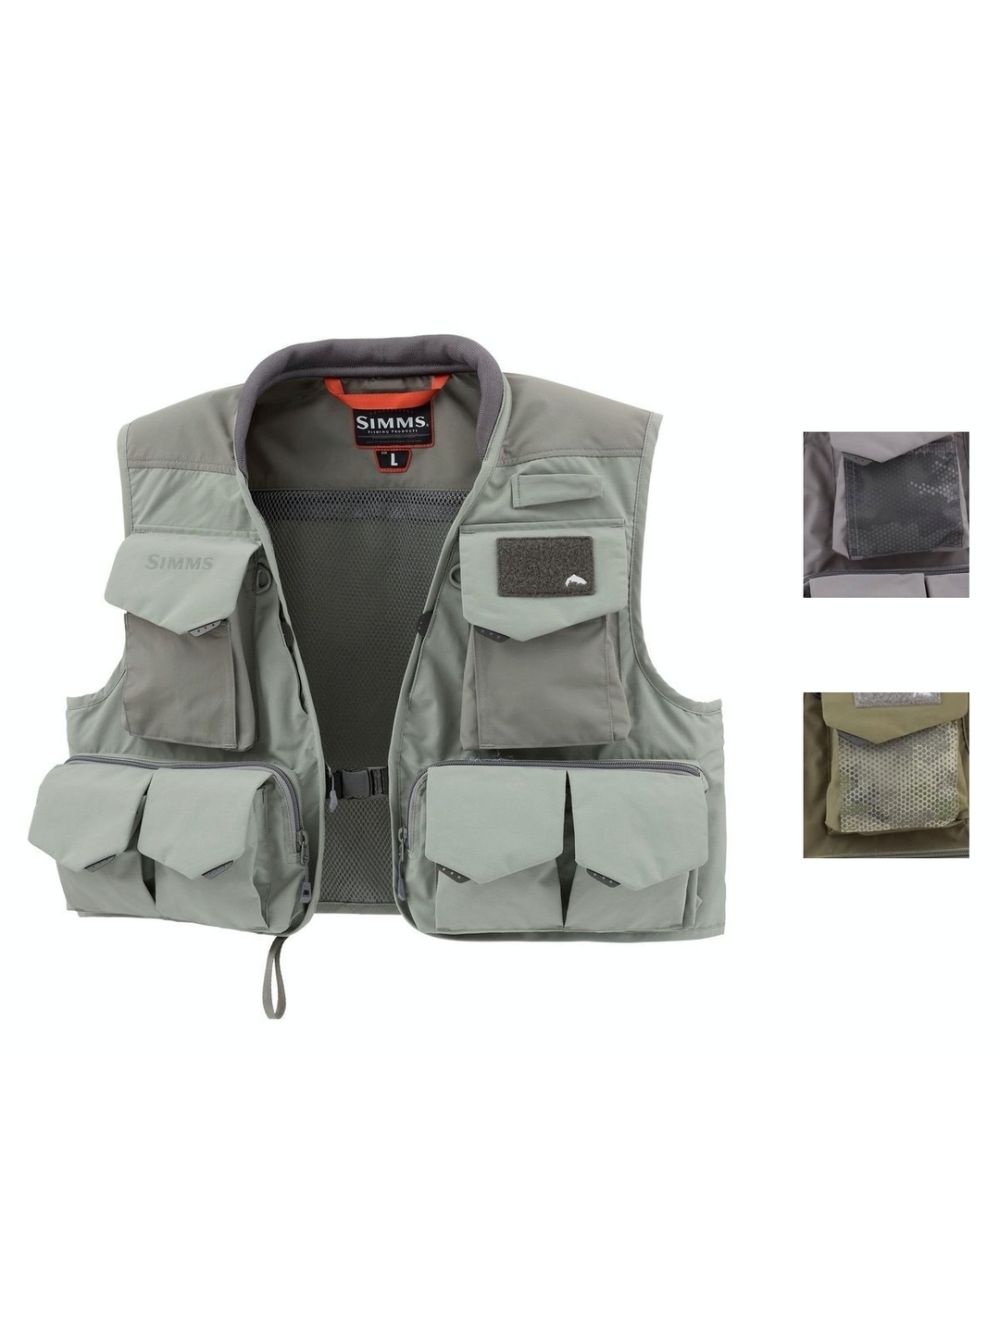 Simms Fly Fishing Vest - Medium size 10+ Pockets FREE SHIPPING 